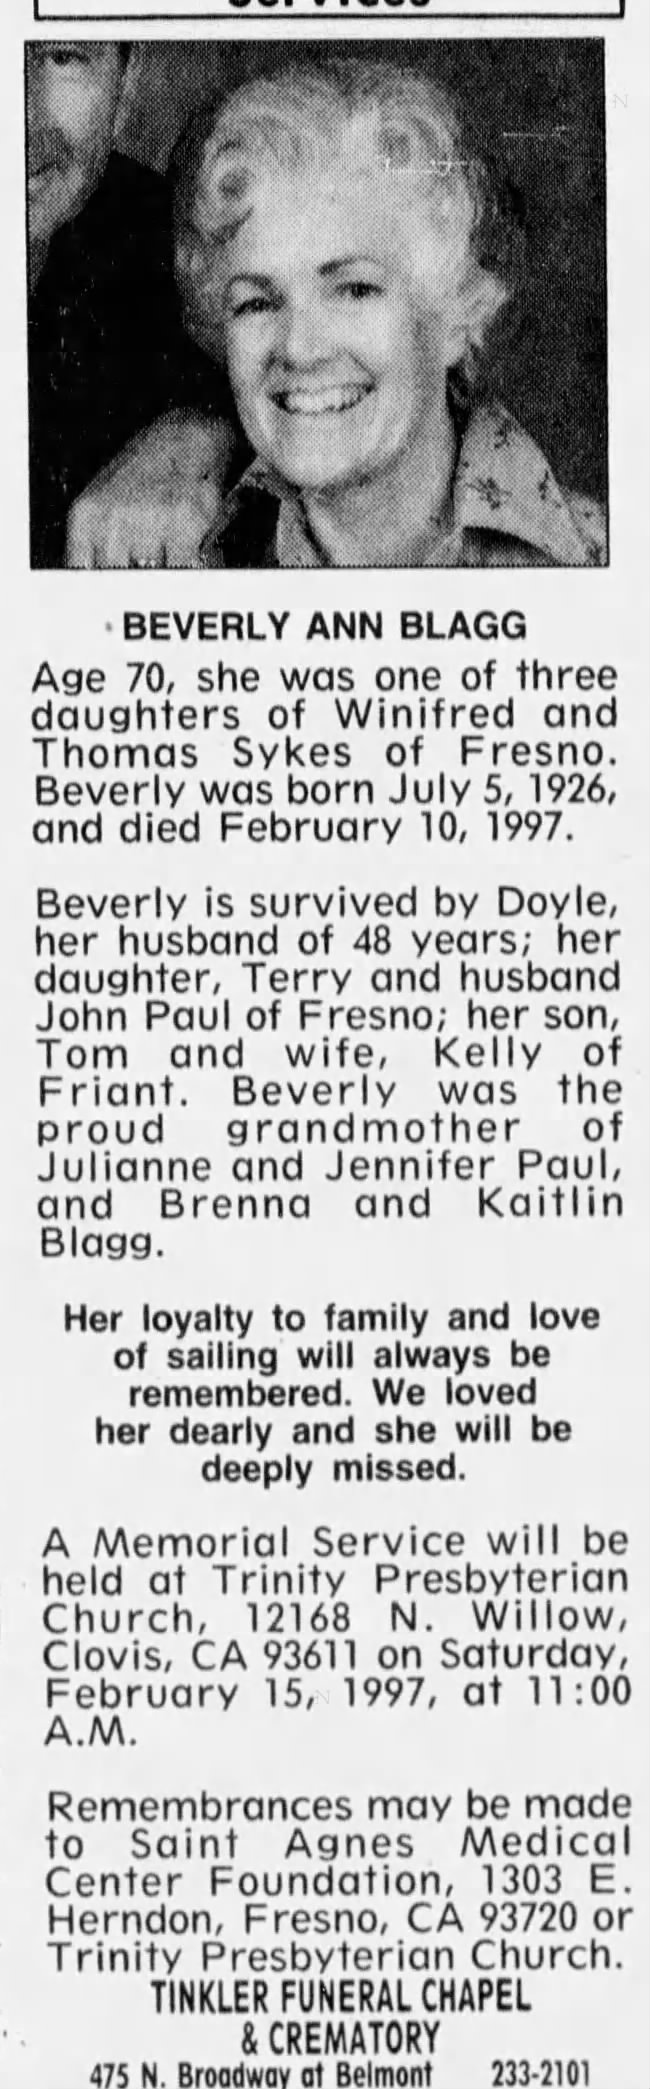 Obituary: Beverly Ann BLAGG, 1926-1997 (Aged 70)